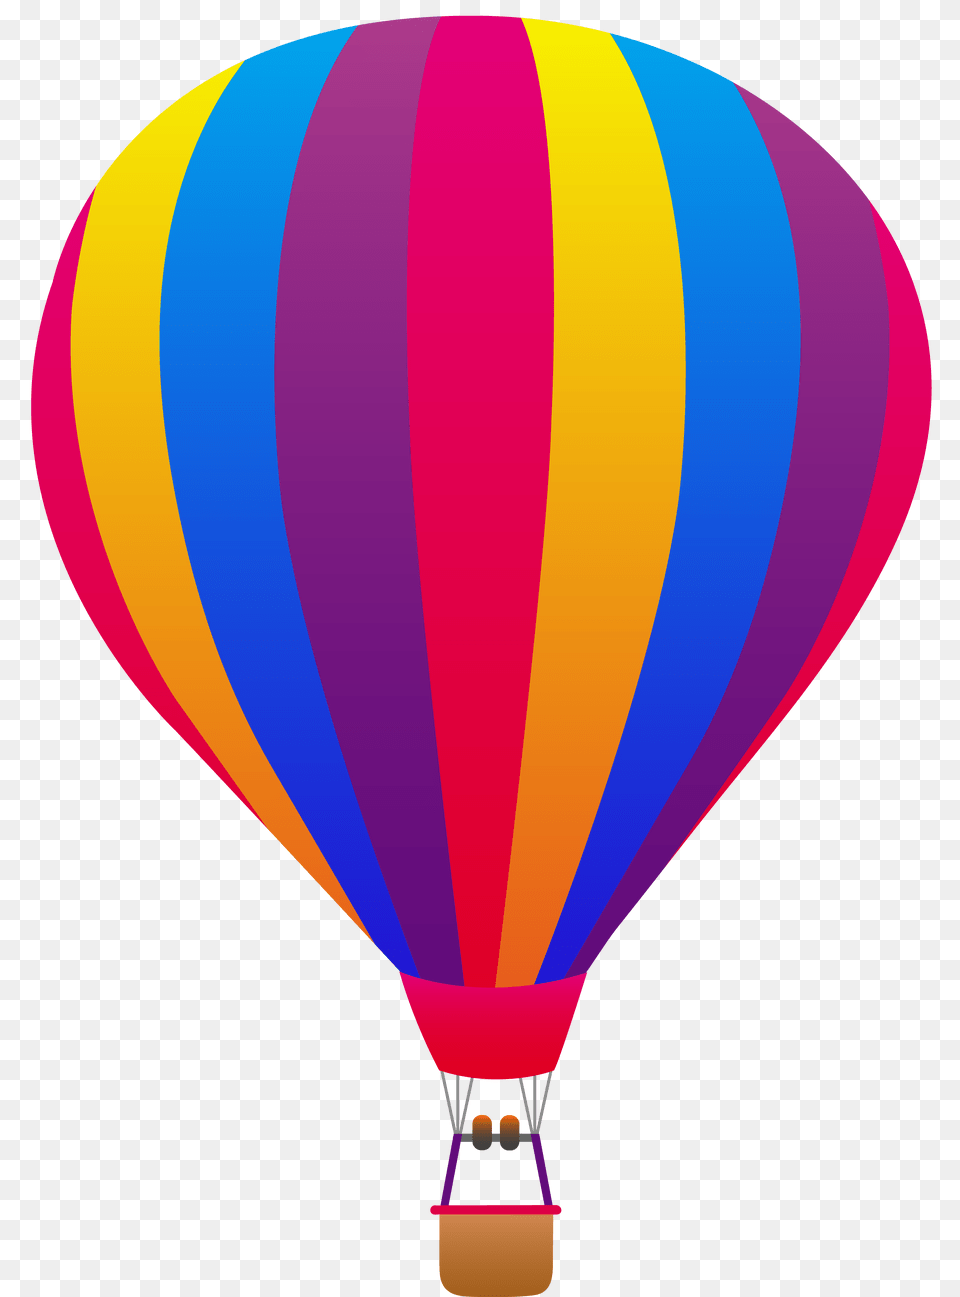 Hot Air Balloon Clip Art Pink Yellow Blue And Purple Balloon, Aircraft, Hot Air Balloon, Transportation, Vehicle Free Png